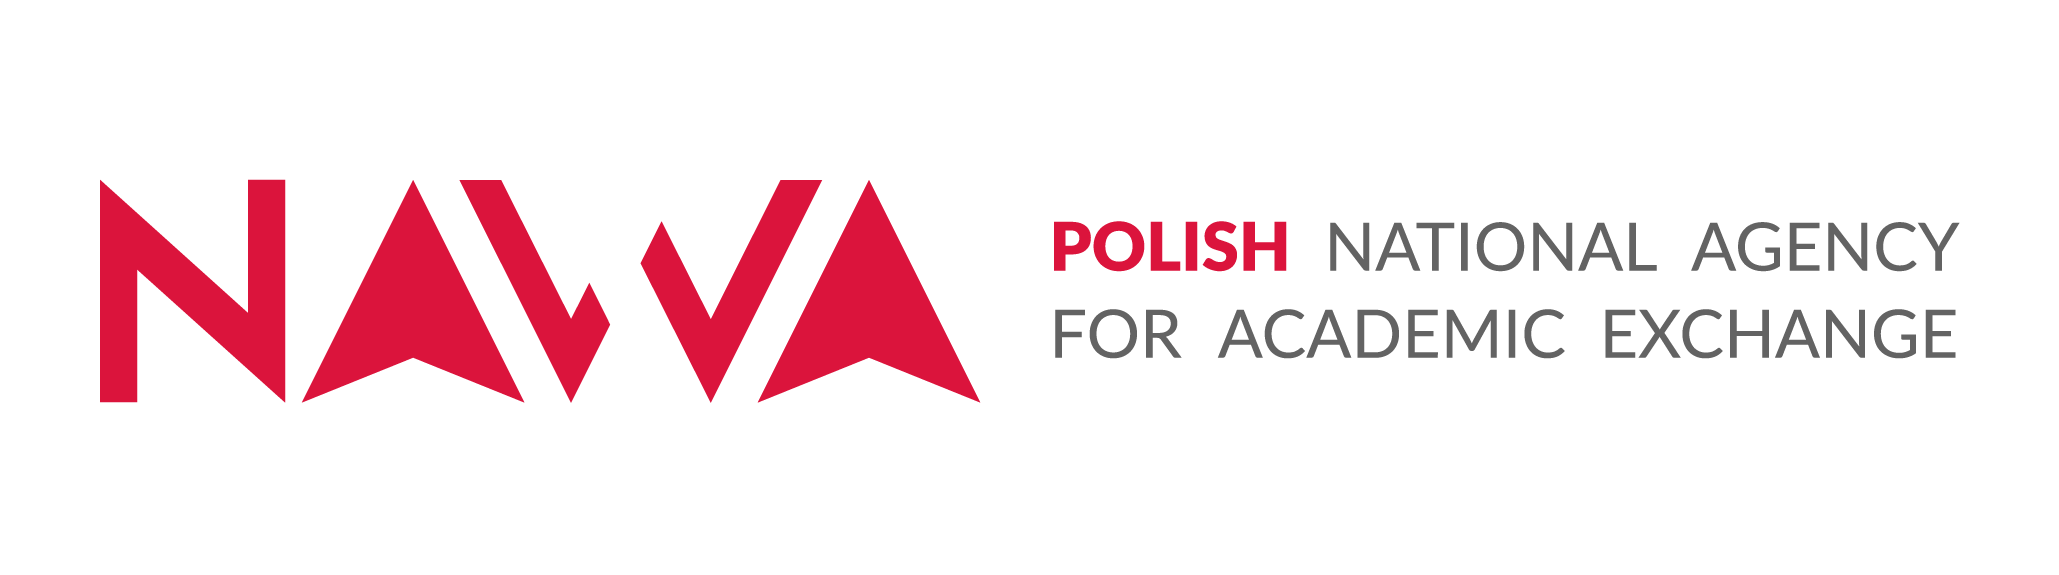 Polish National Agency for Academic Exchange logo.